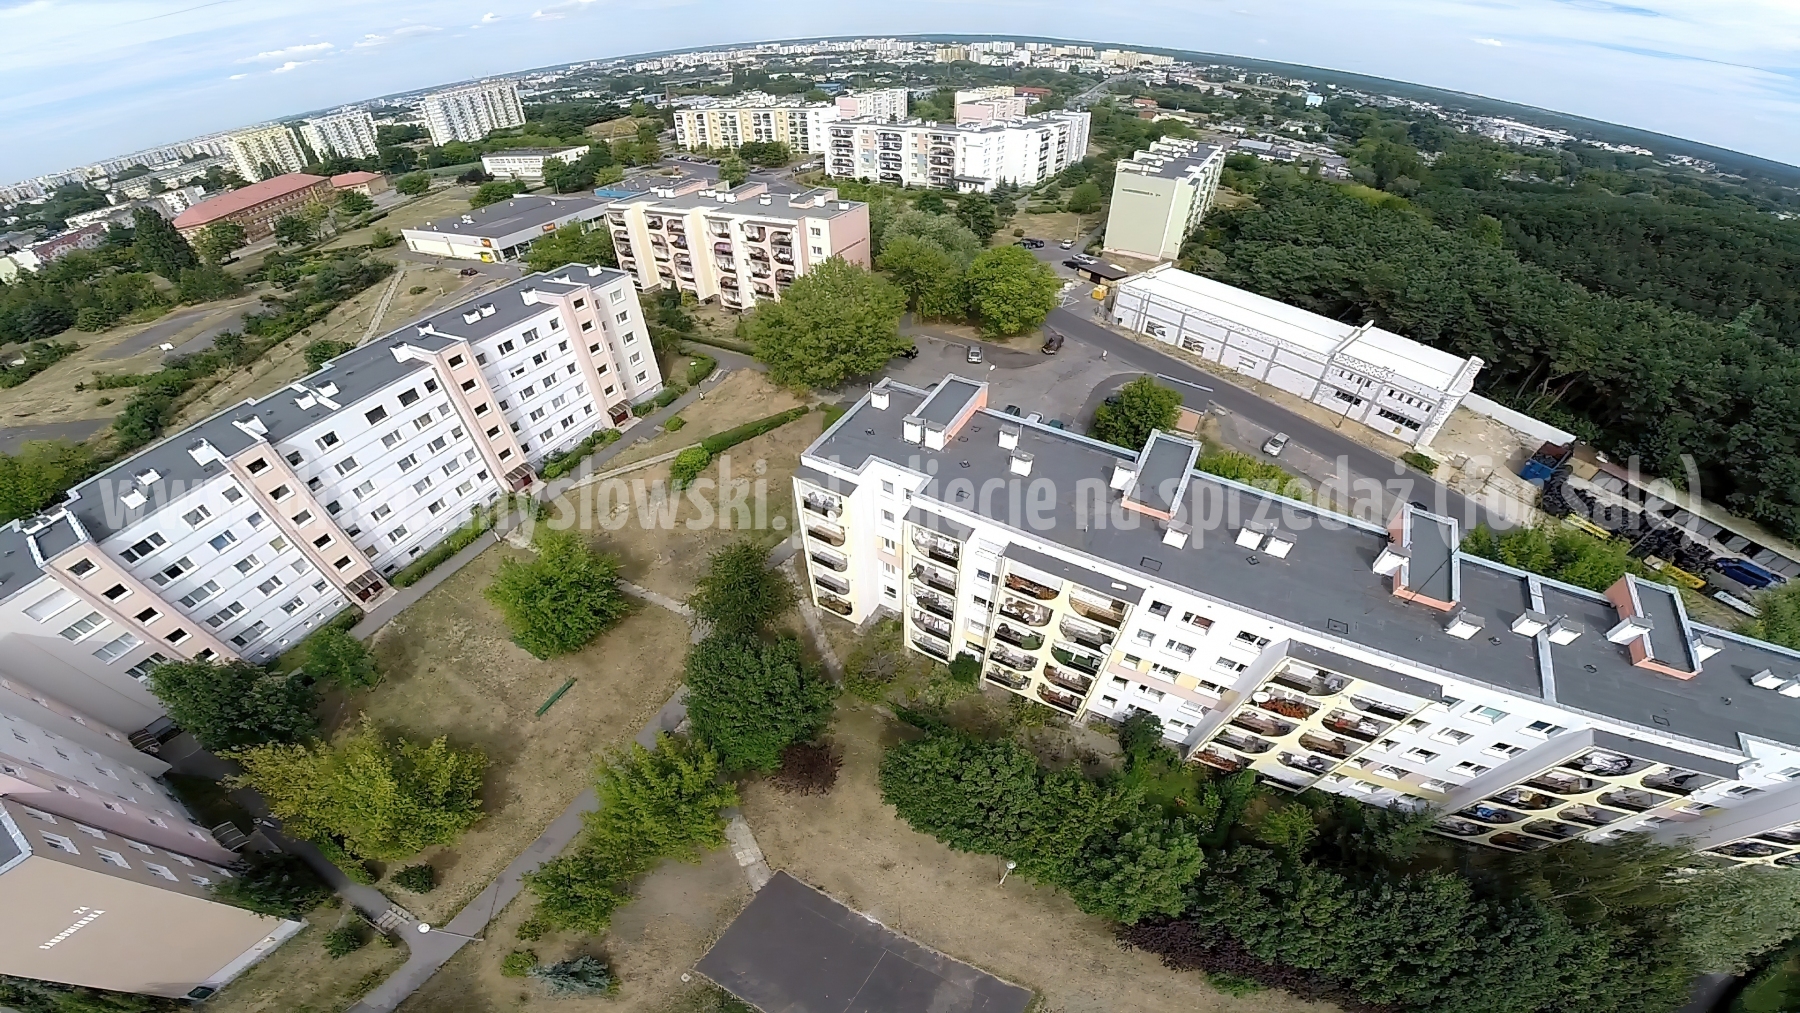 2014-08-01-dron-na-Sandomierskiej-013-gigapixel-standard-width-3840px-SharpenAI-Motion